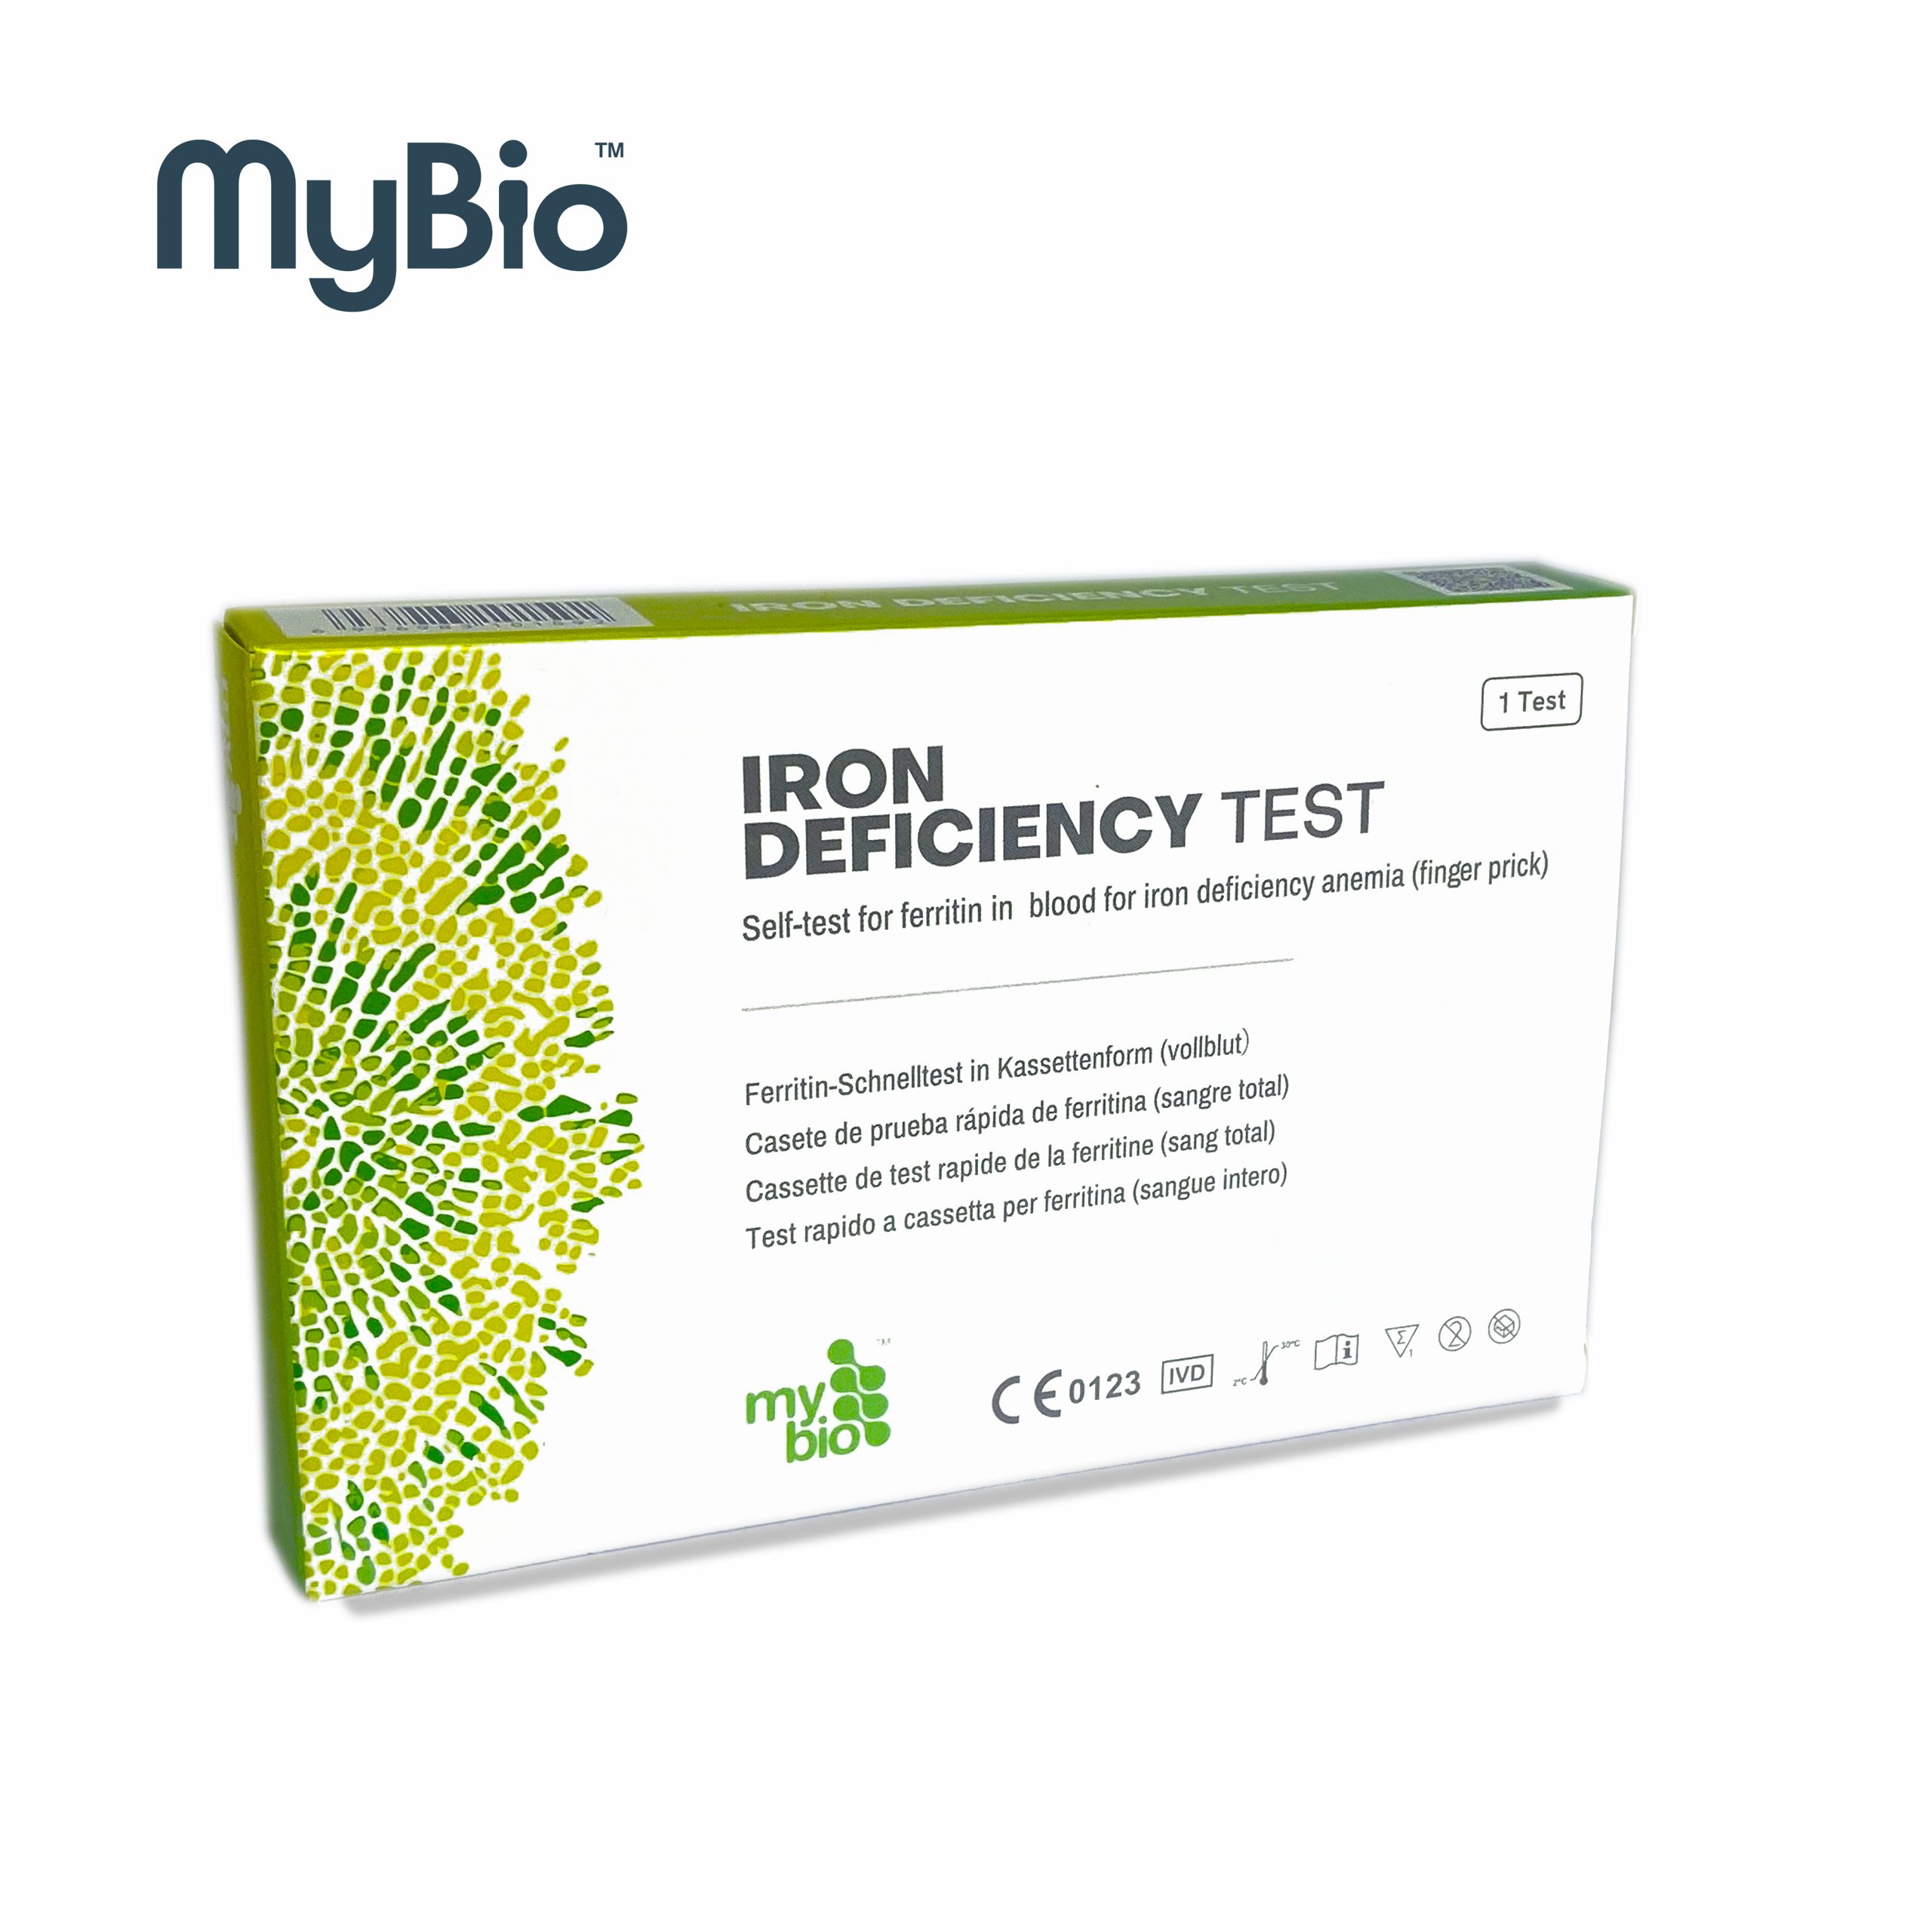 MyBio iron deficiency test